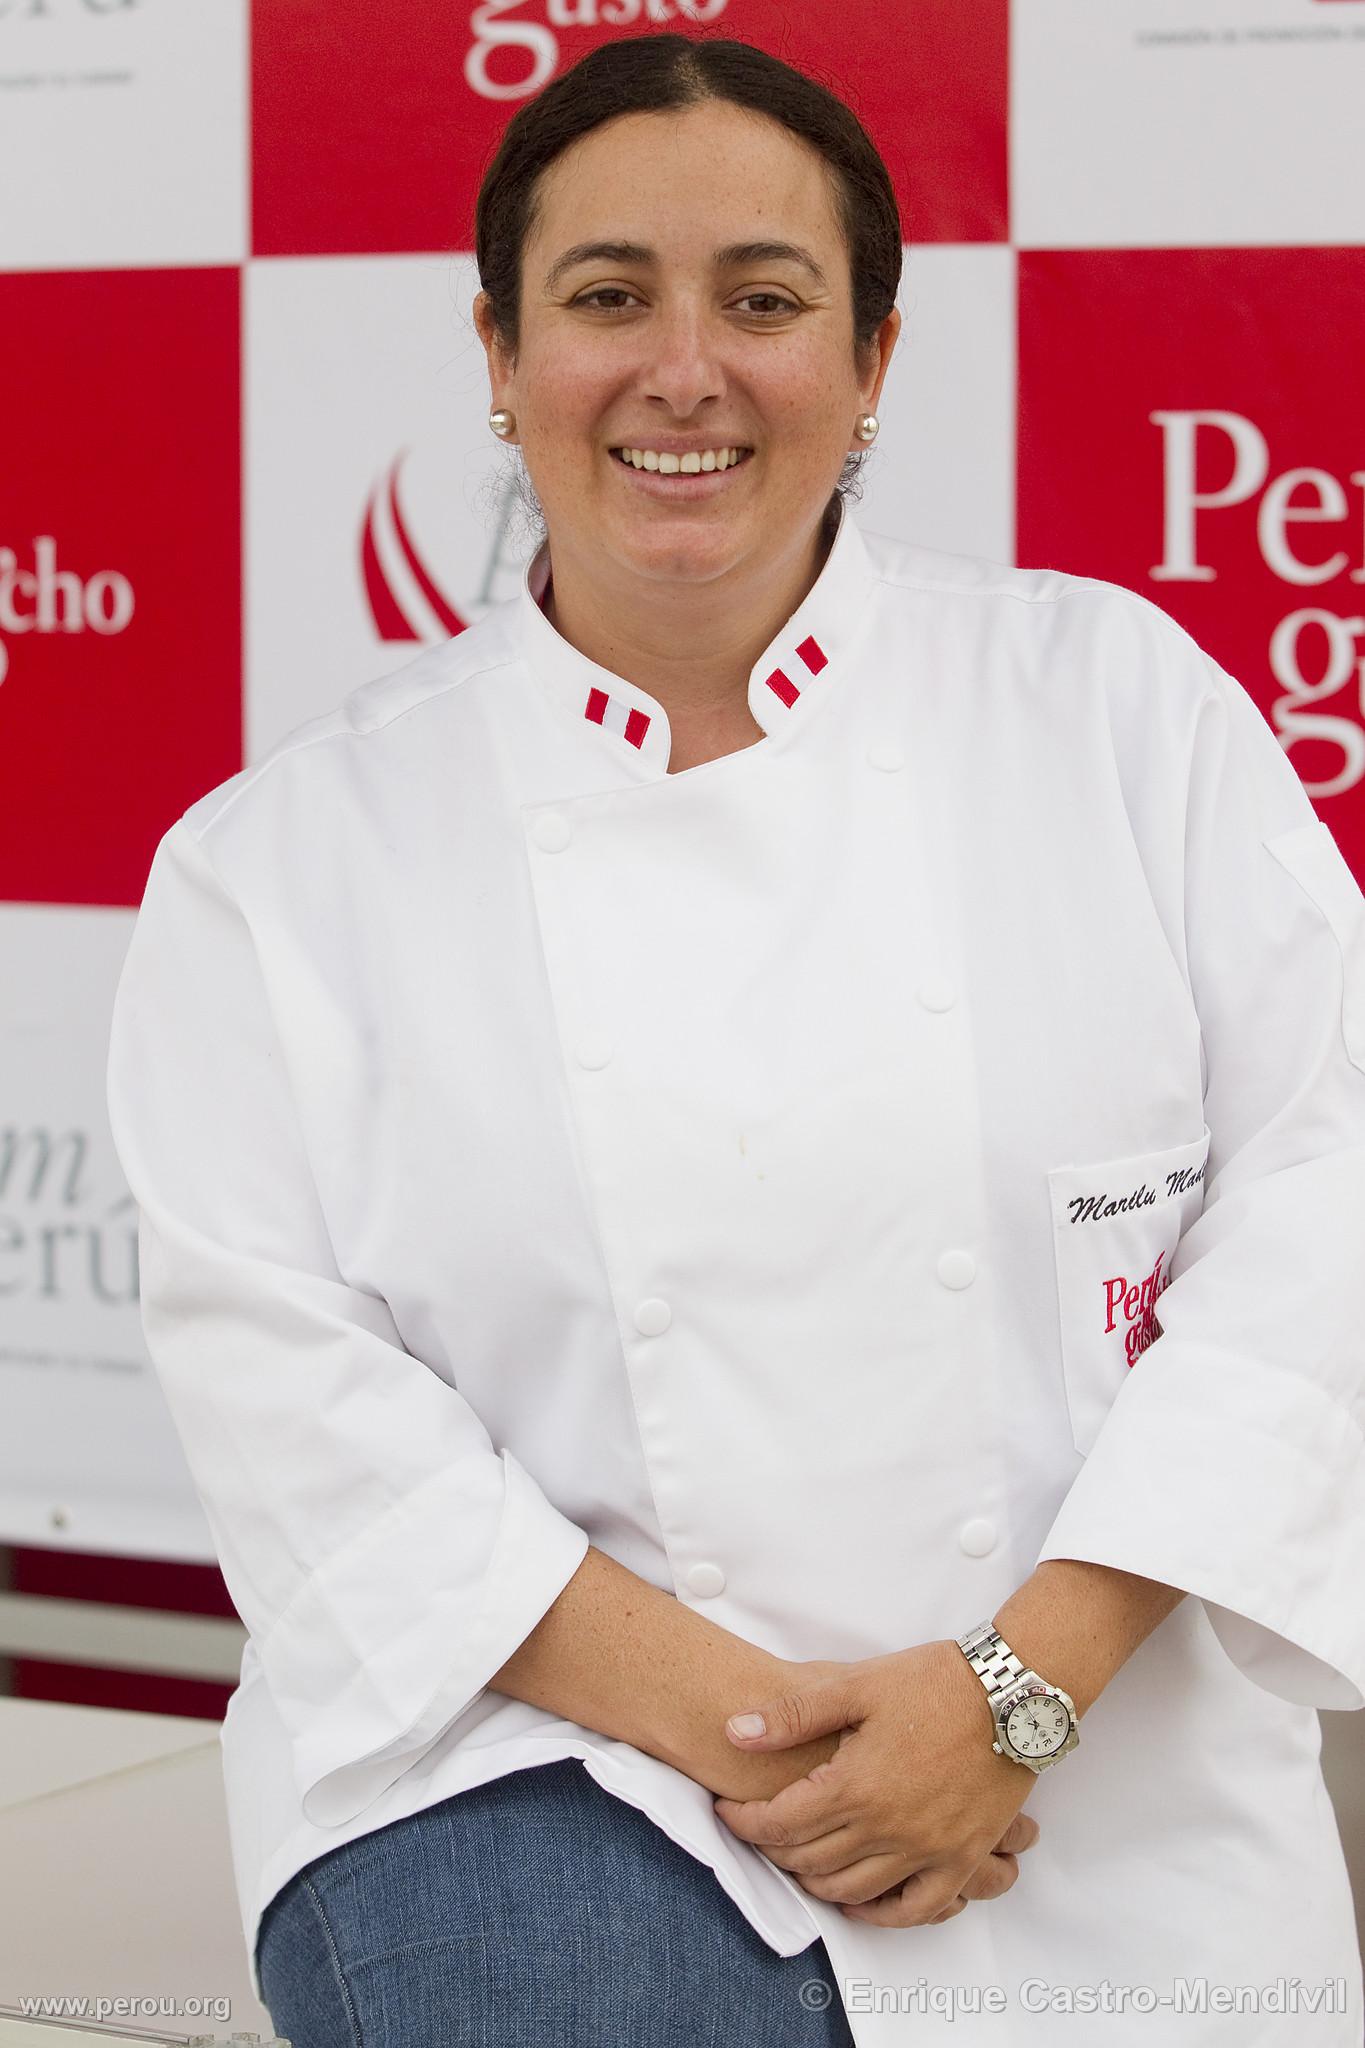 Chef Marilú Madueño